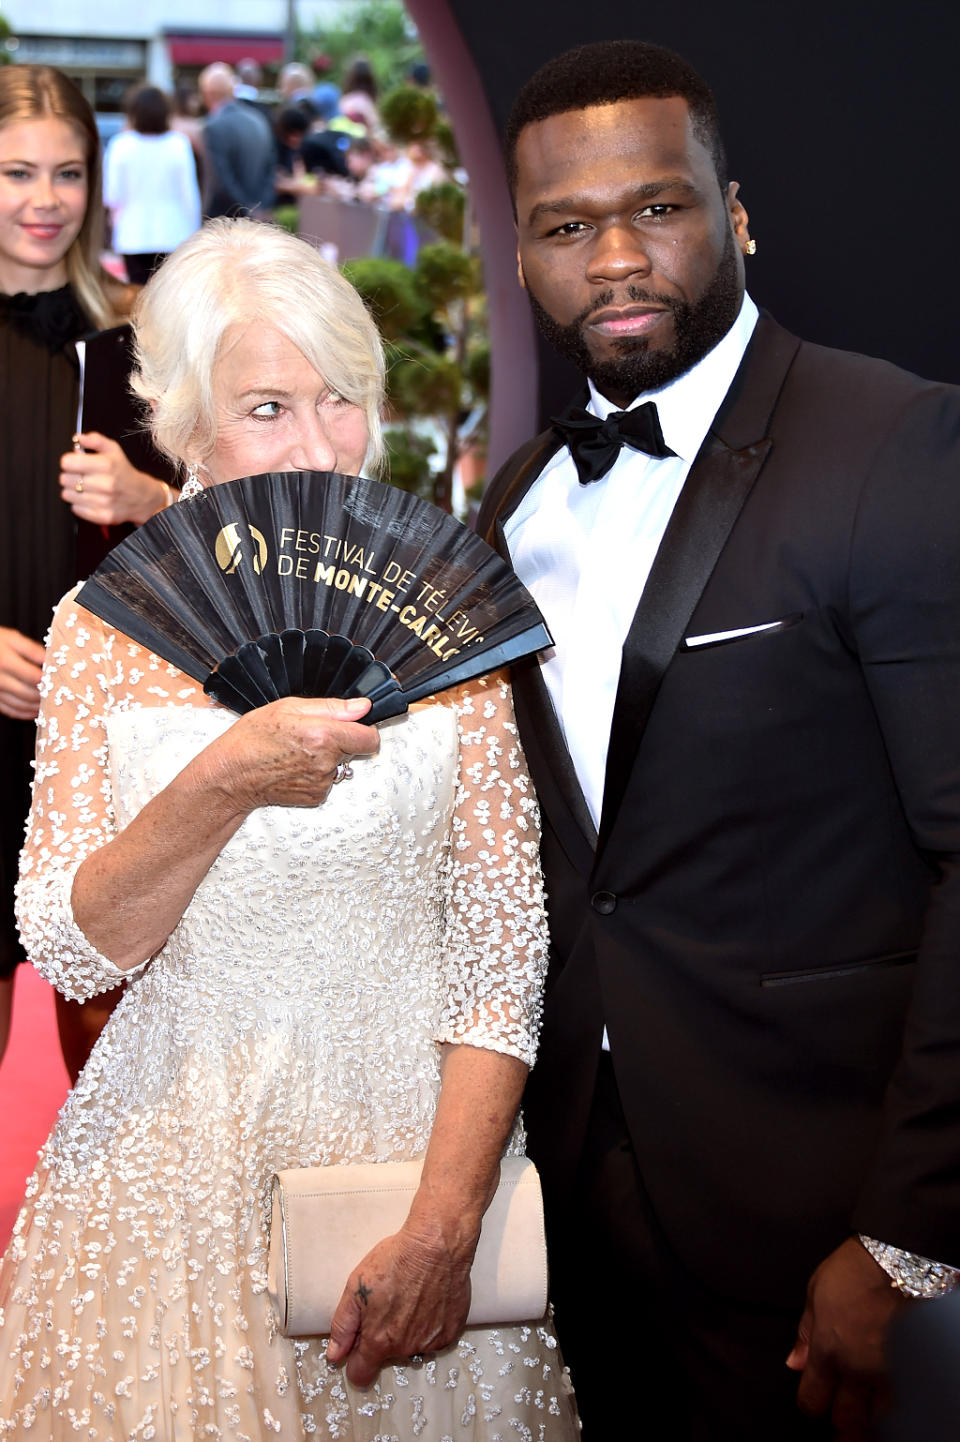 Helen Mirren and 50 Cent